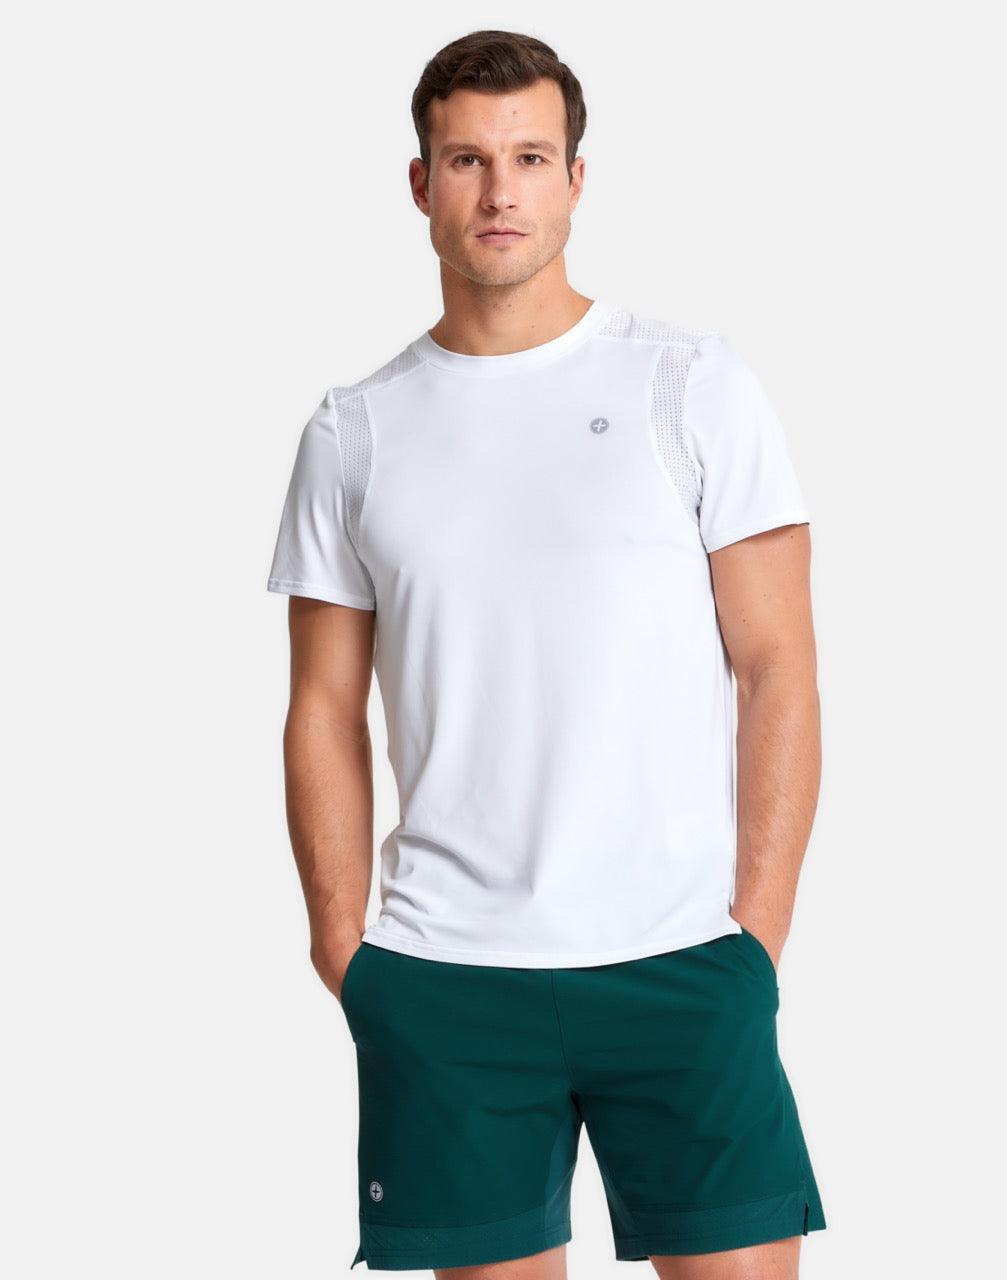 Men's Celero Tee in Striker White - T-Shirts - Gym+Coffee IE